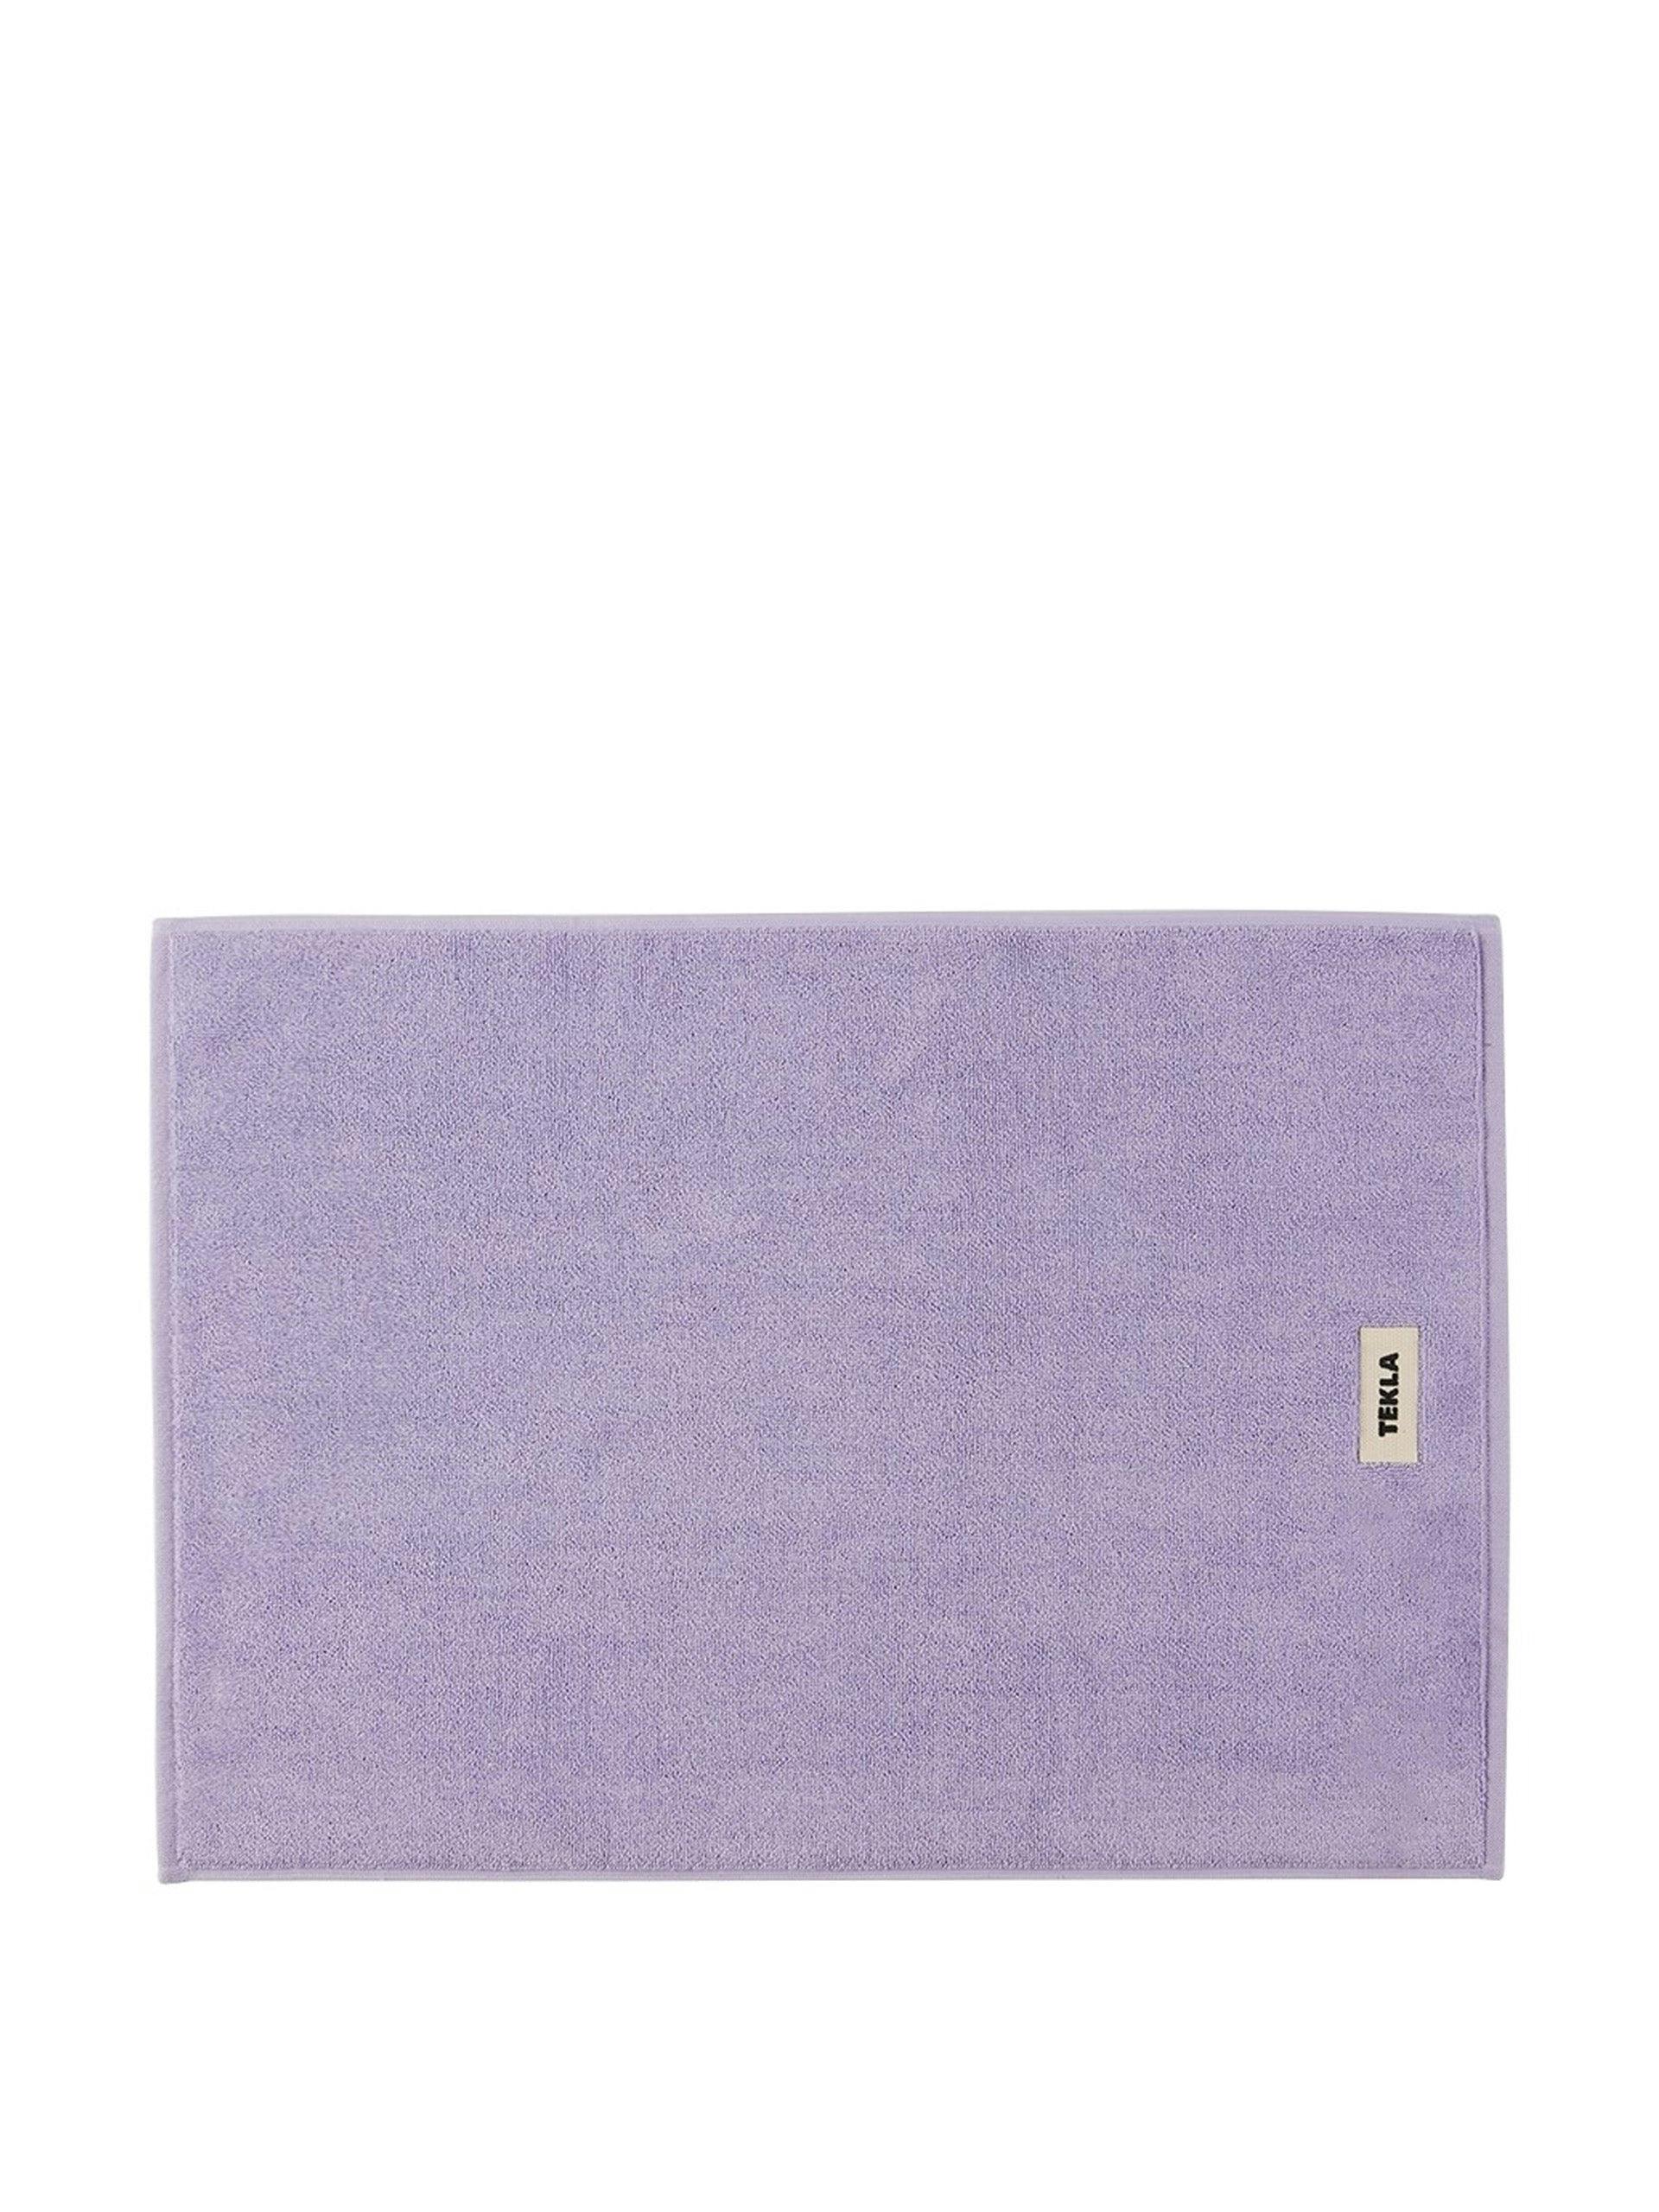 Purple organic cotton bath mat